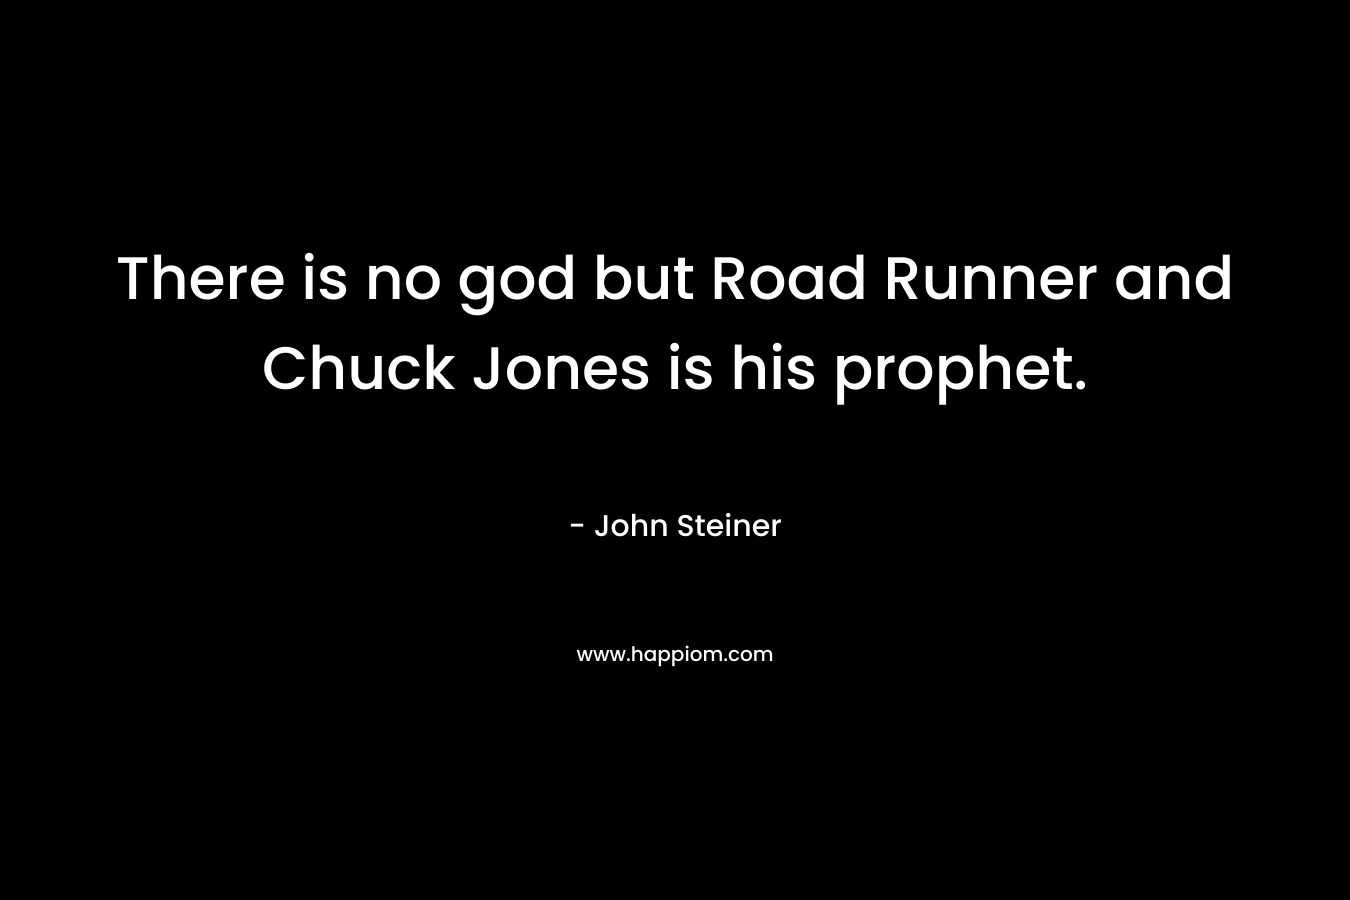 There is no god but Road Runner and Chuck Jones is his prophet. – John Steiner